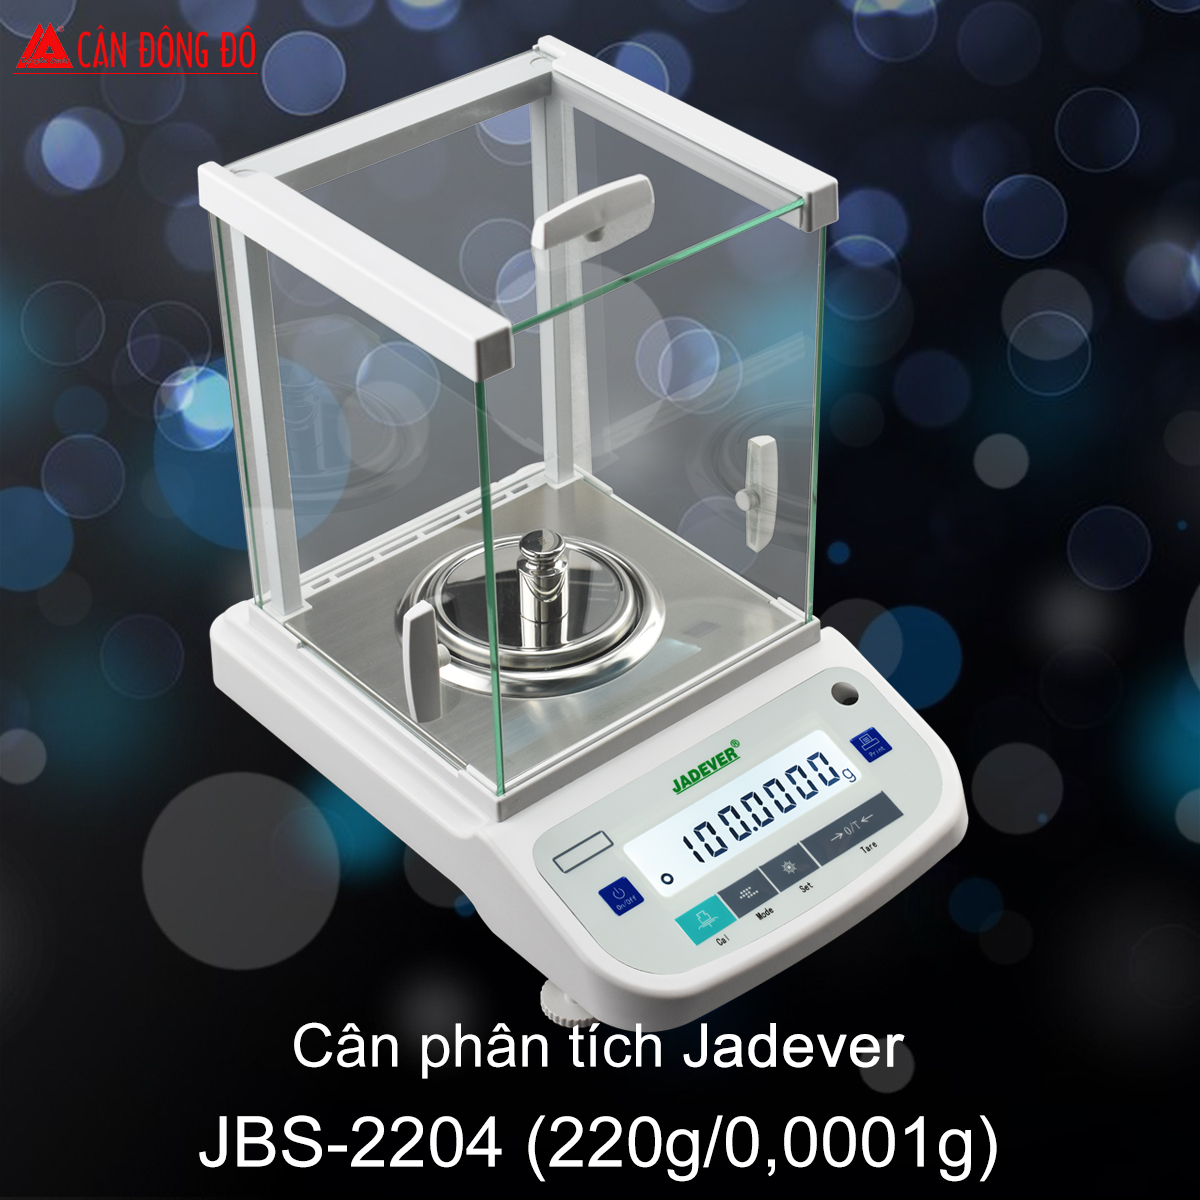 Jadever JBS-2204